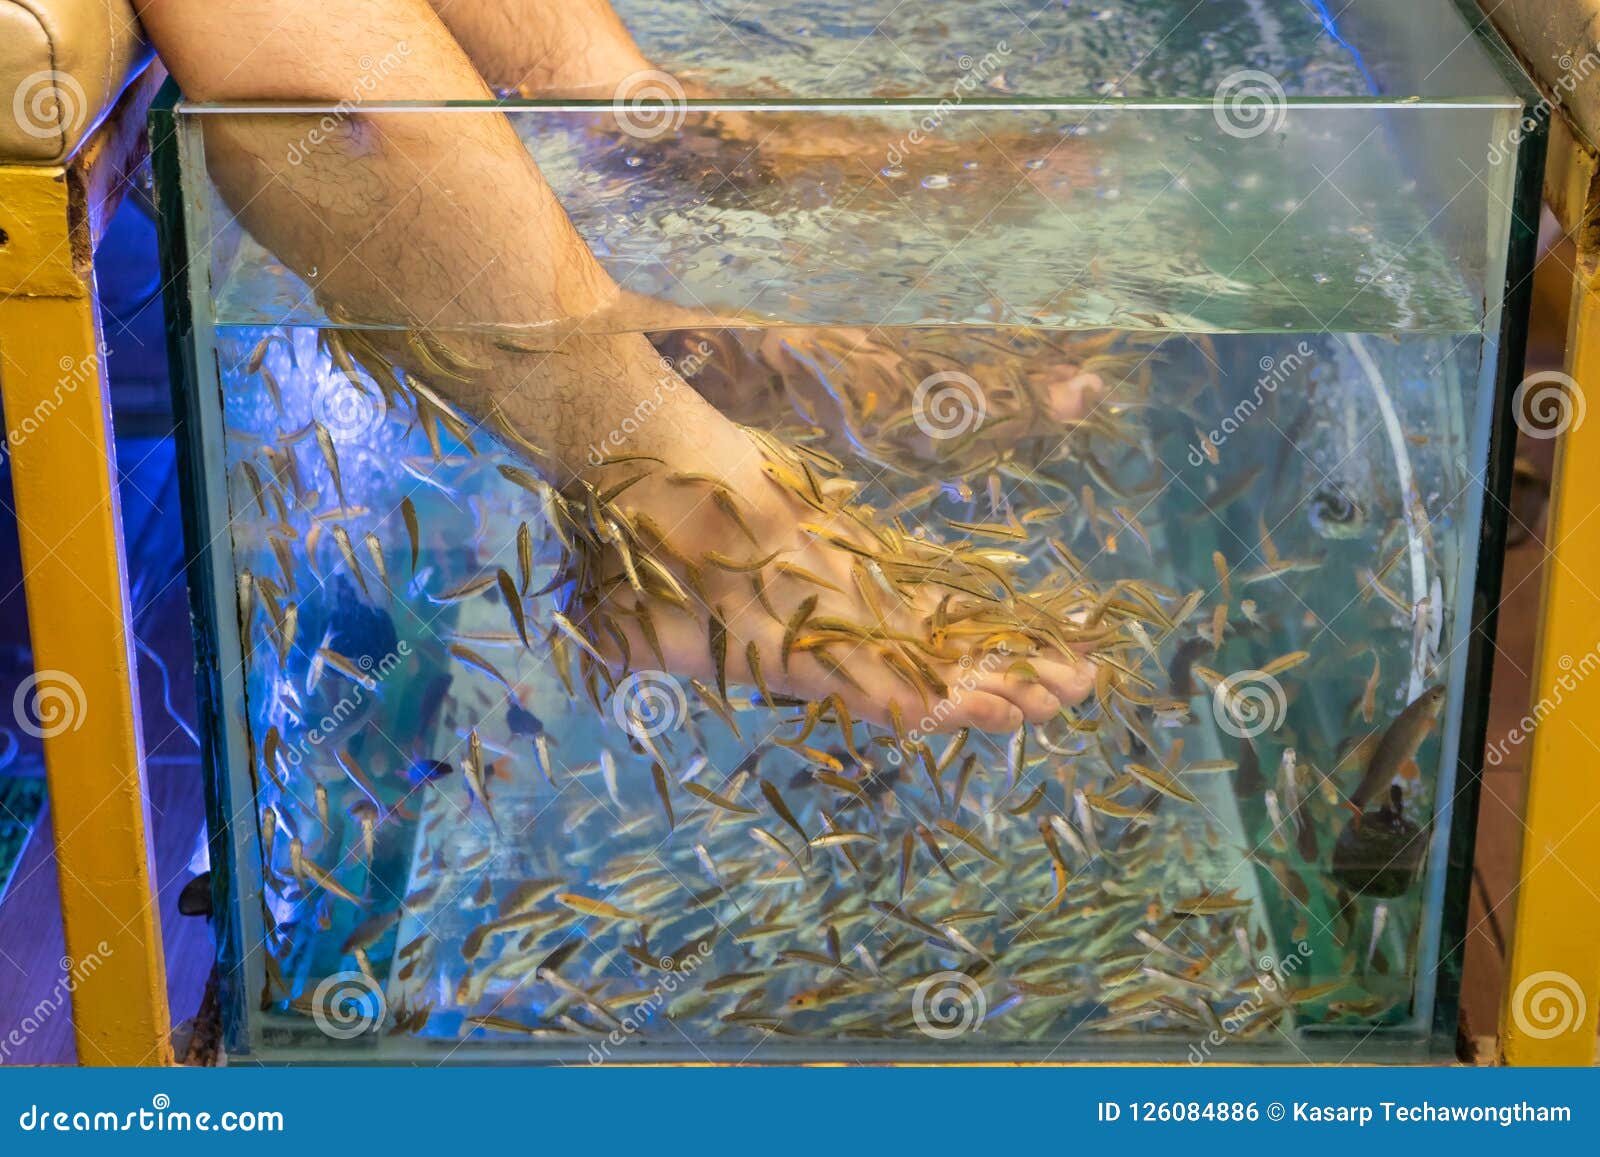 foot-spa-doctor-fish-freshwater-used-treating-skin-diseases-eating-dead-off-feet-man-pedicure-massage-bangkok-126084886.jpg